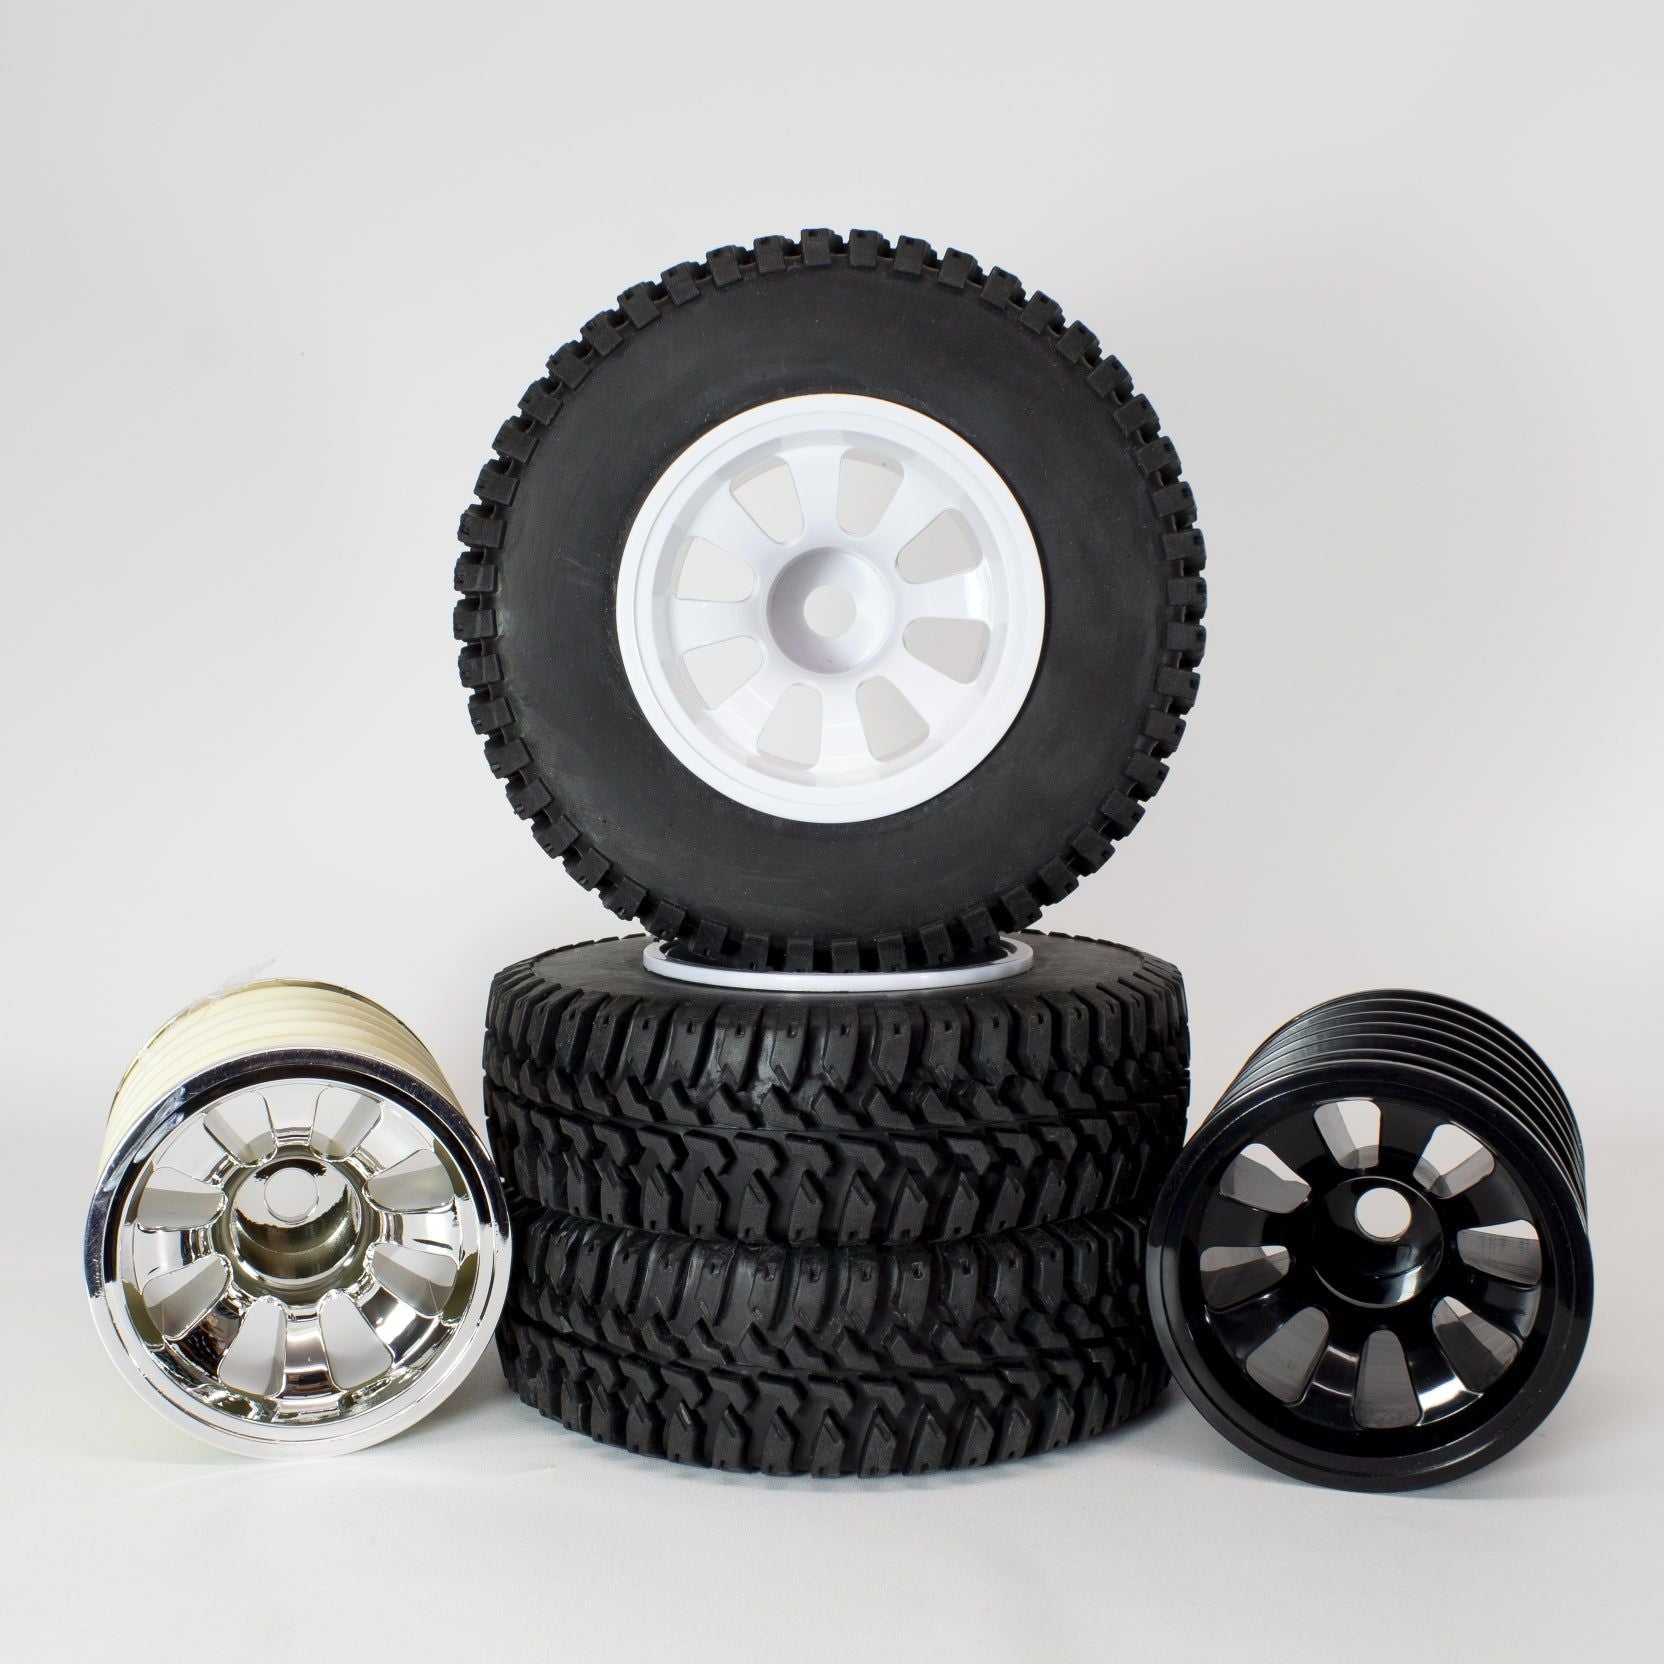 IMEX 3.2 Dually Tires & Sayville Rims (1 Pair)